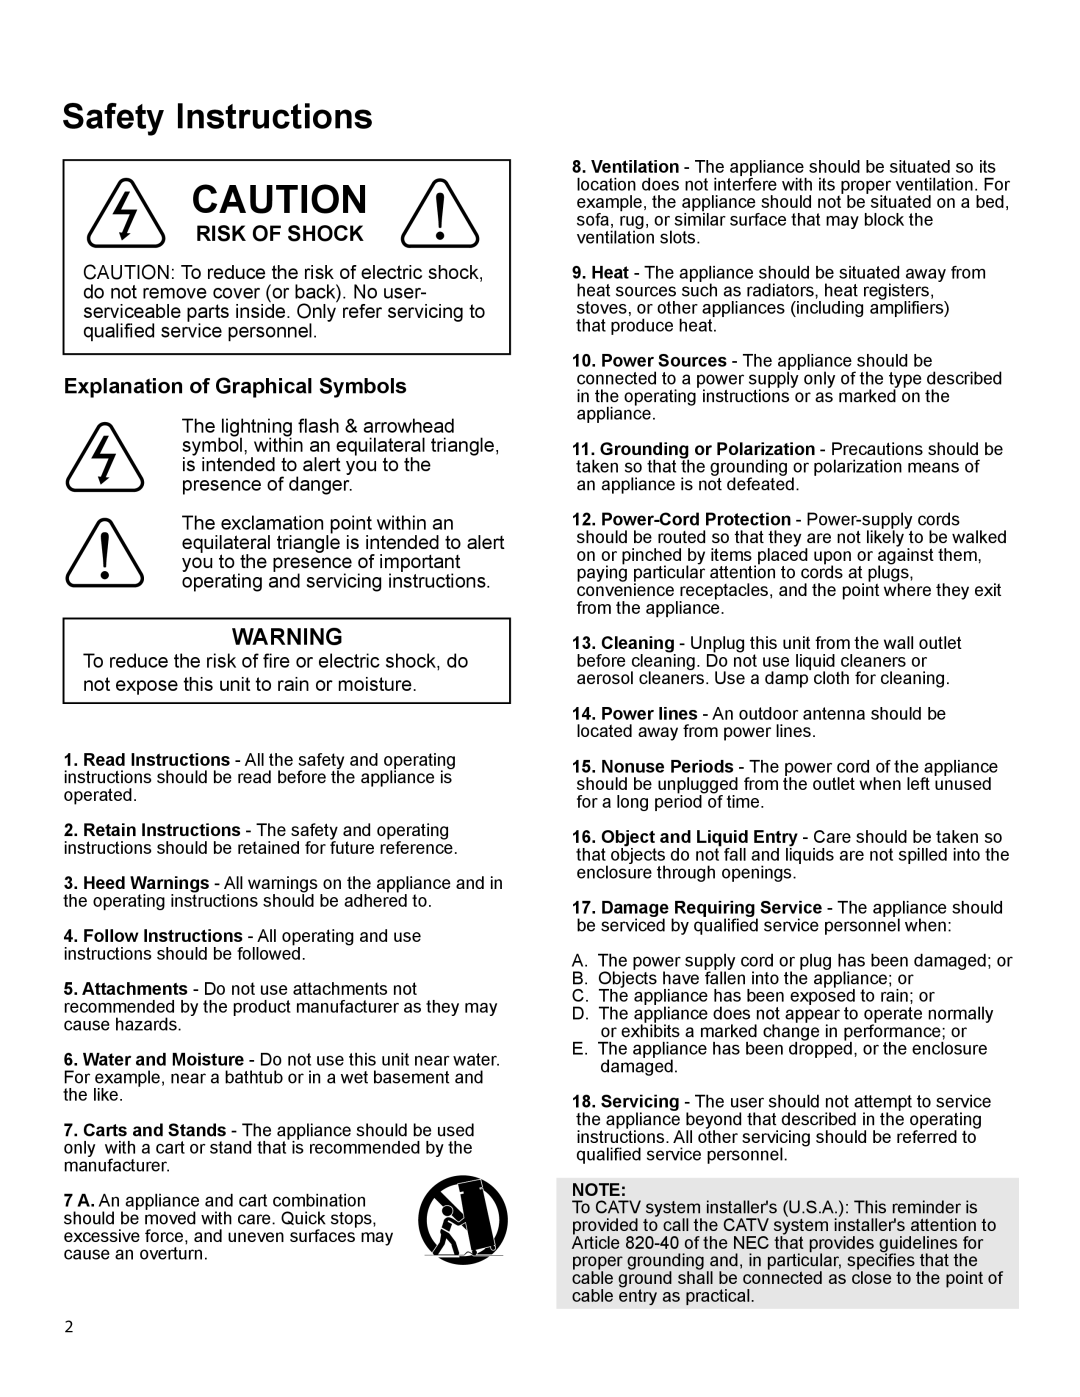 VocoPro DIGITAL KARAOKE SYSTEM owner manual Safety Instructions, Risk Of Shock, Explanation of Graphical Symbols 